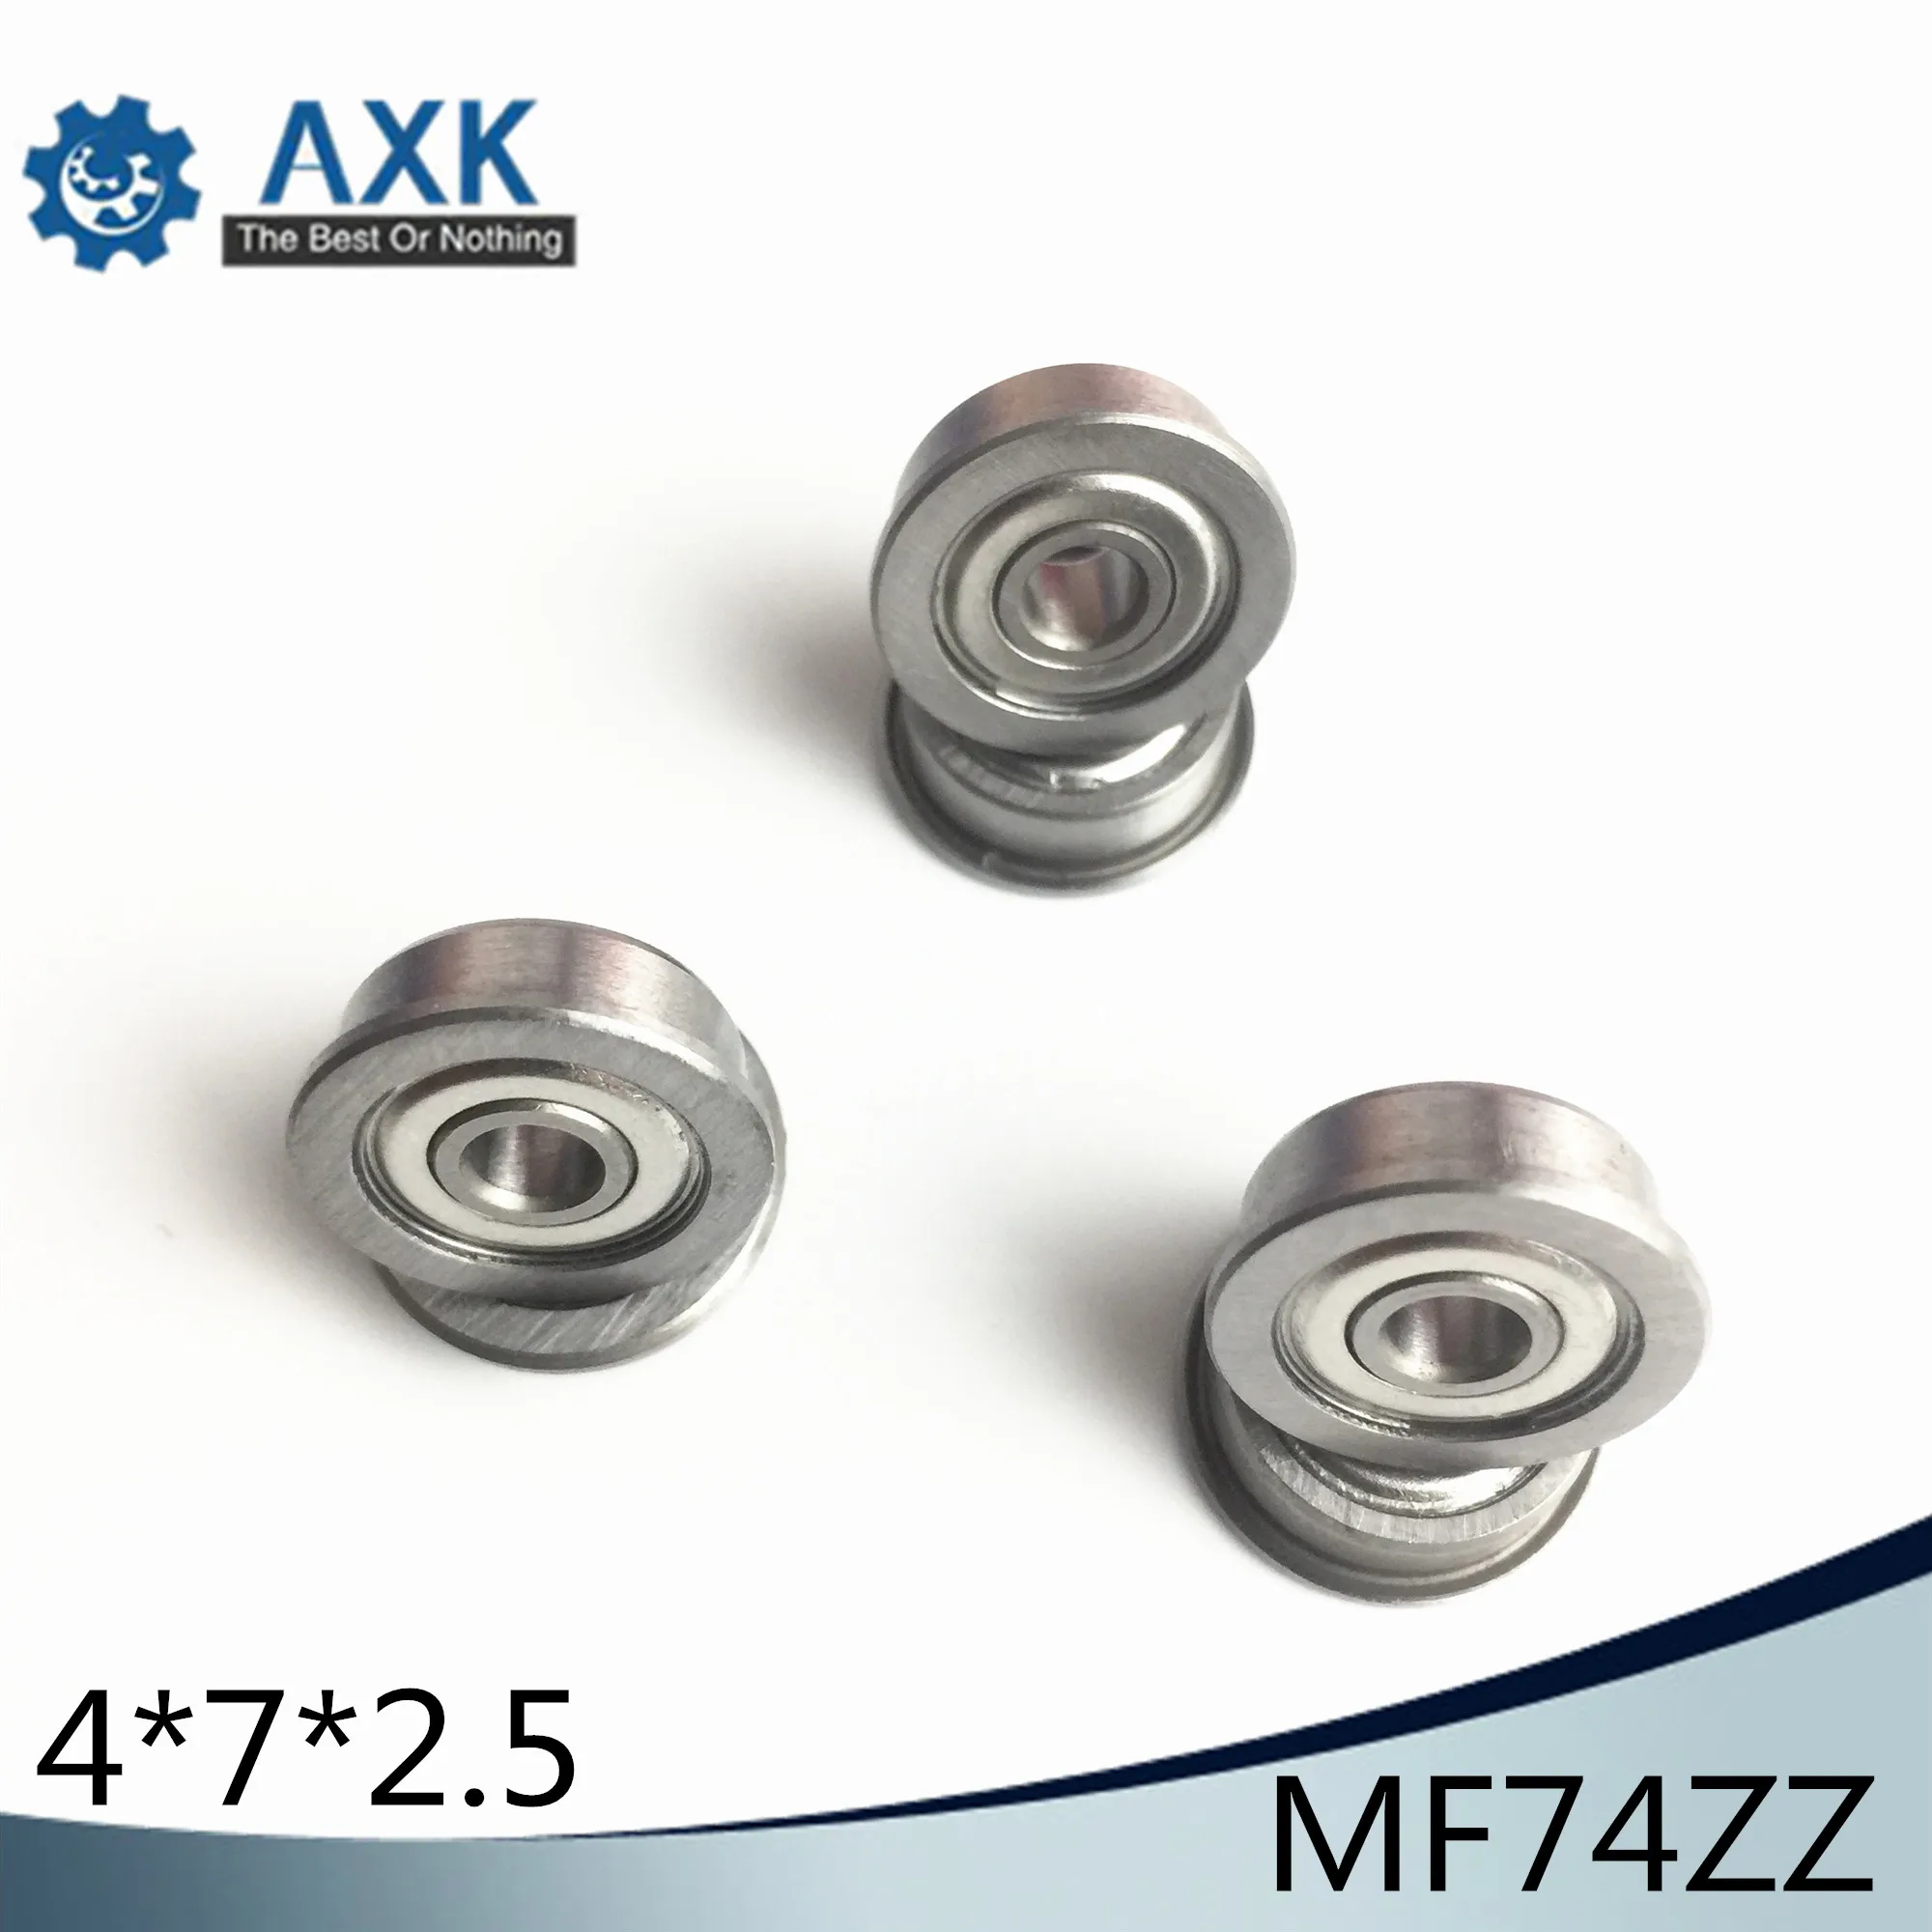 MF74ZZ Flange Bearing 4x7x2.5 mm ABEC-1 ( 10 PCS ) Miniature Flanged MF74 Z ZZ Ball Bearings images - 1